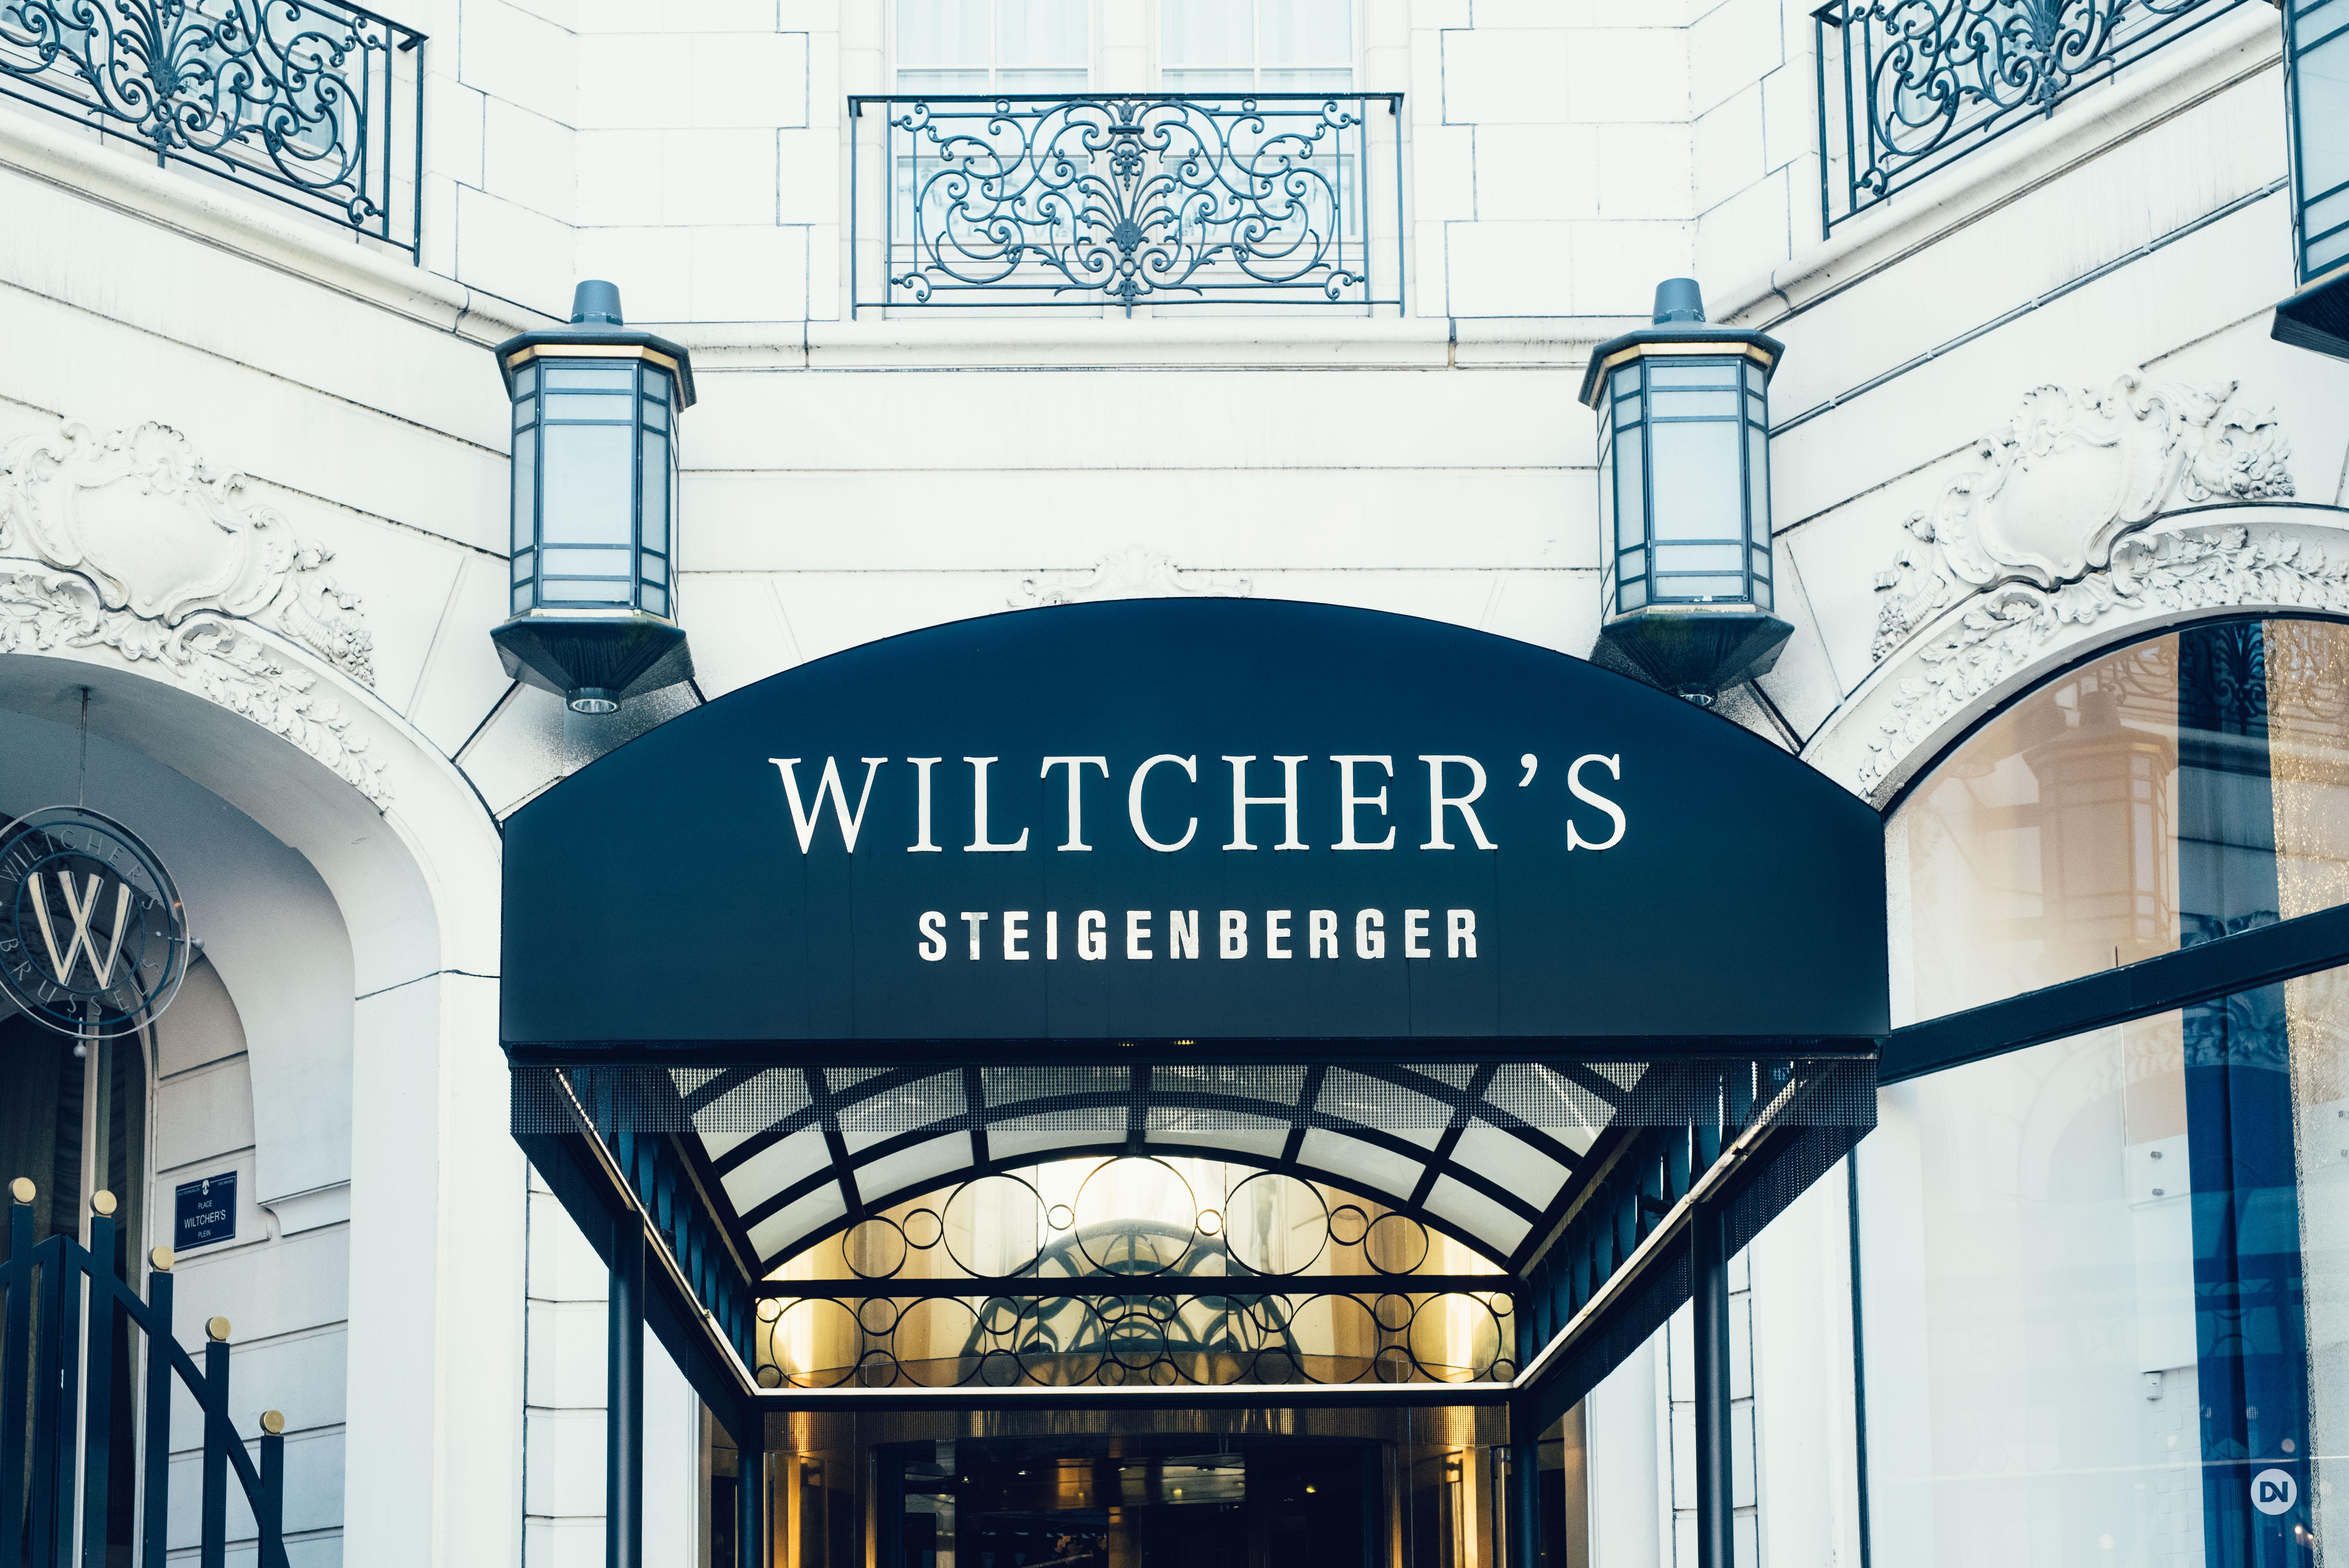 Steigenberger Wiltcher's